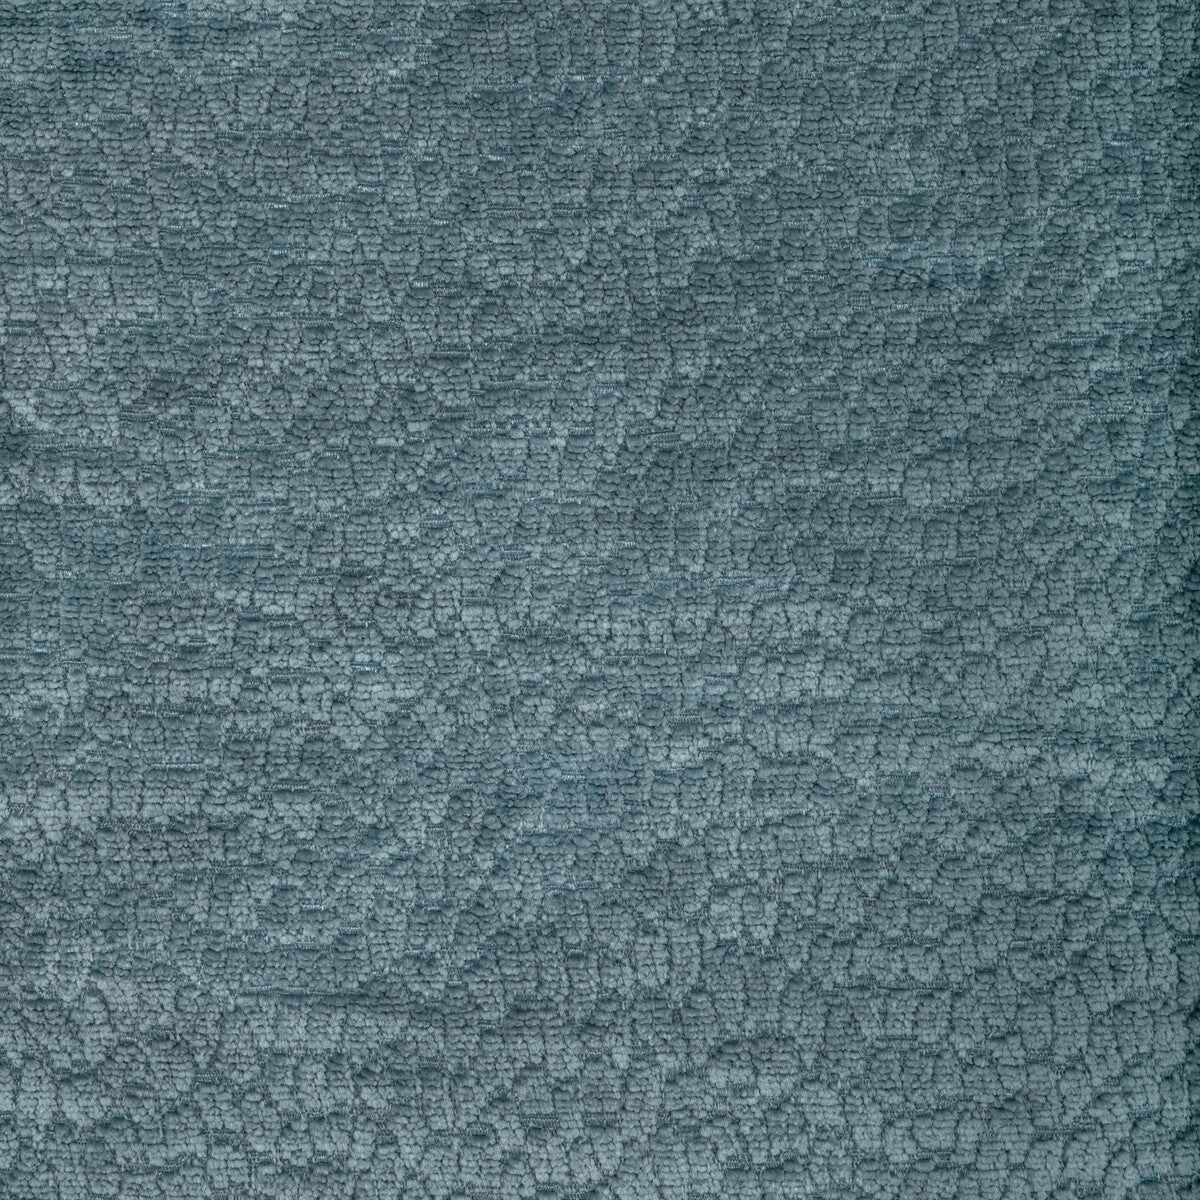 Kravet Smart fabric in 36606-515 color - pattern 36606.515.0 - by Kravet Smart in the Performance Kravetarmor collection